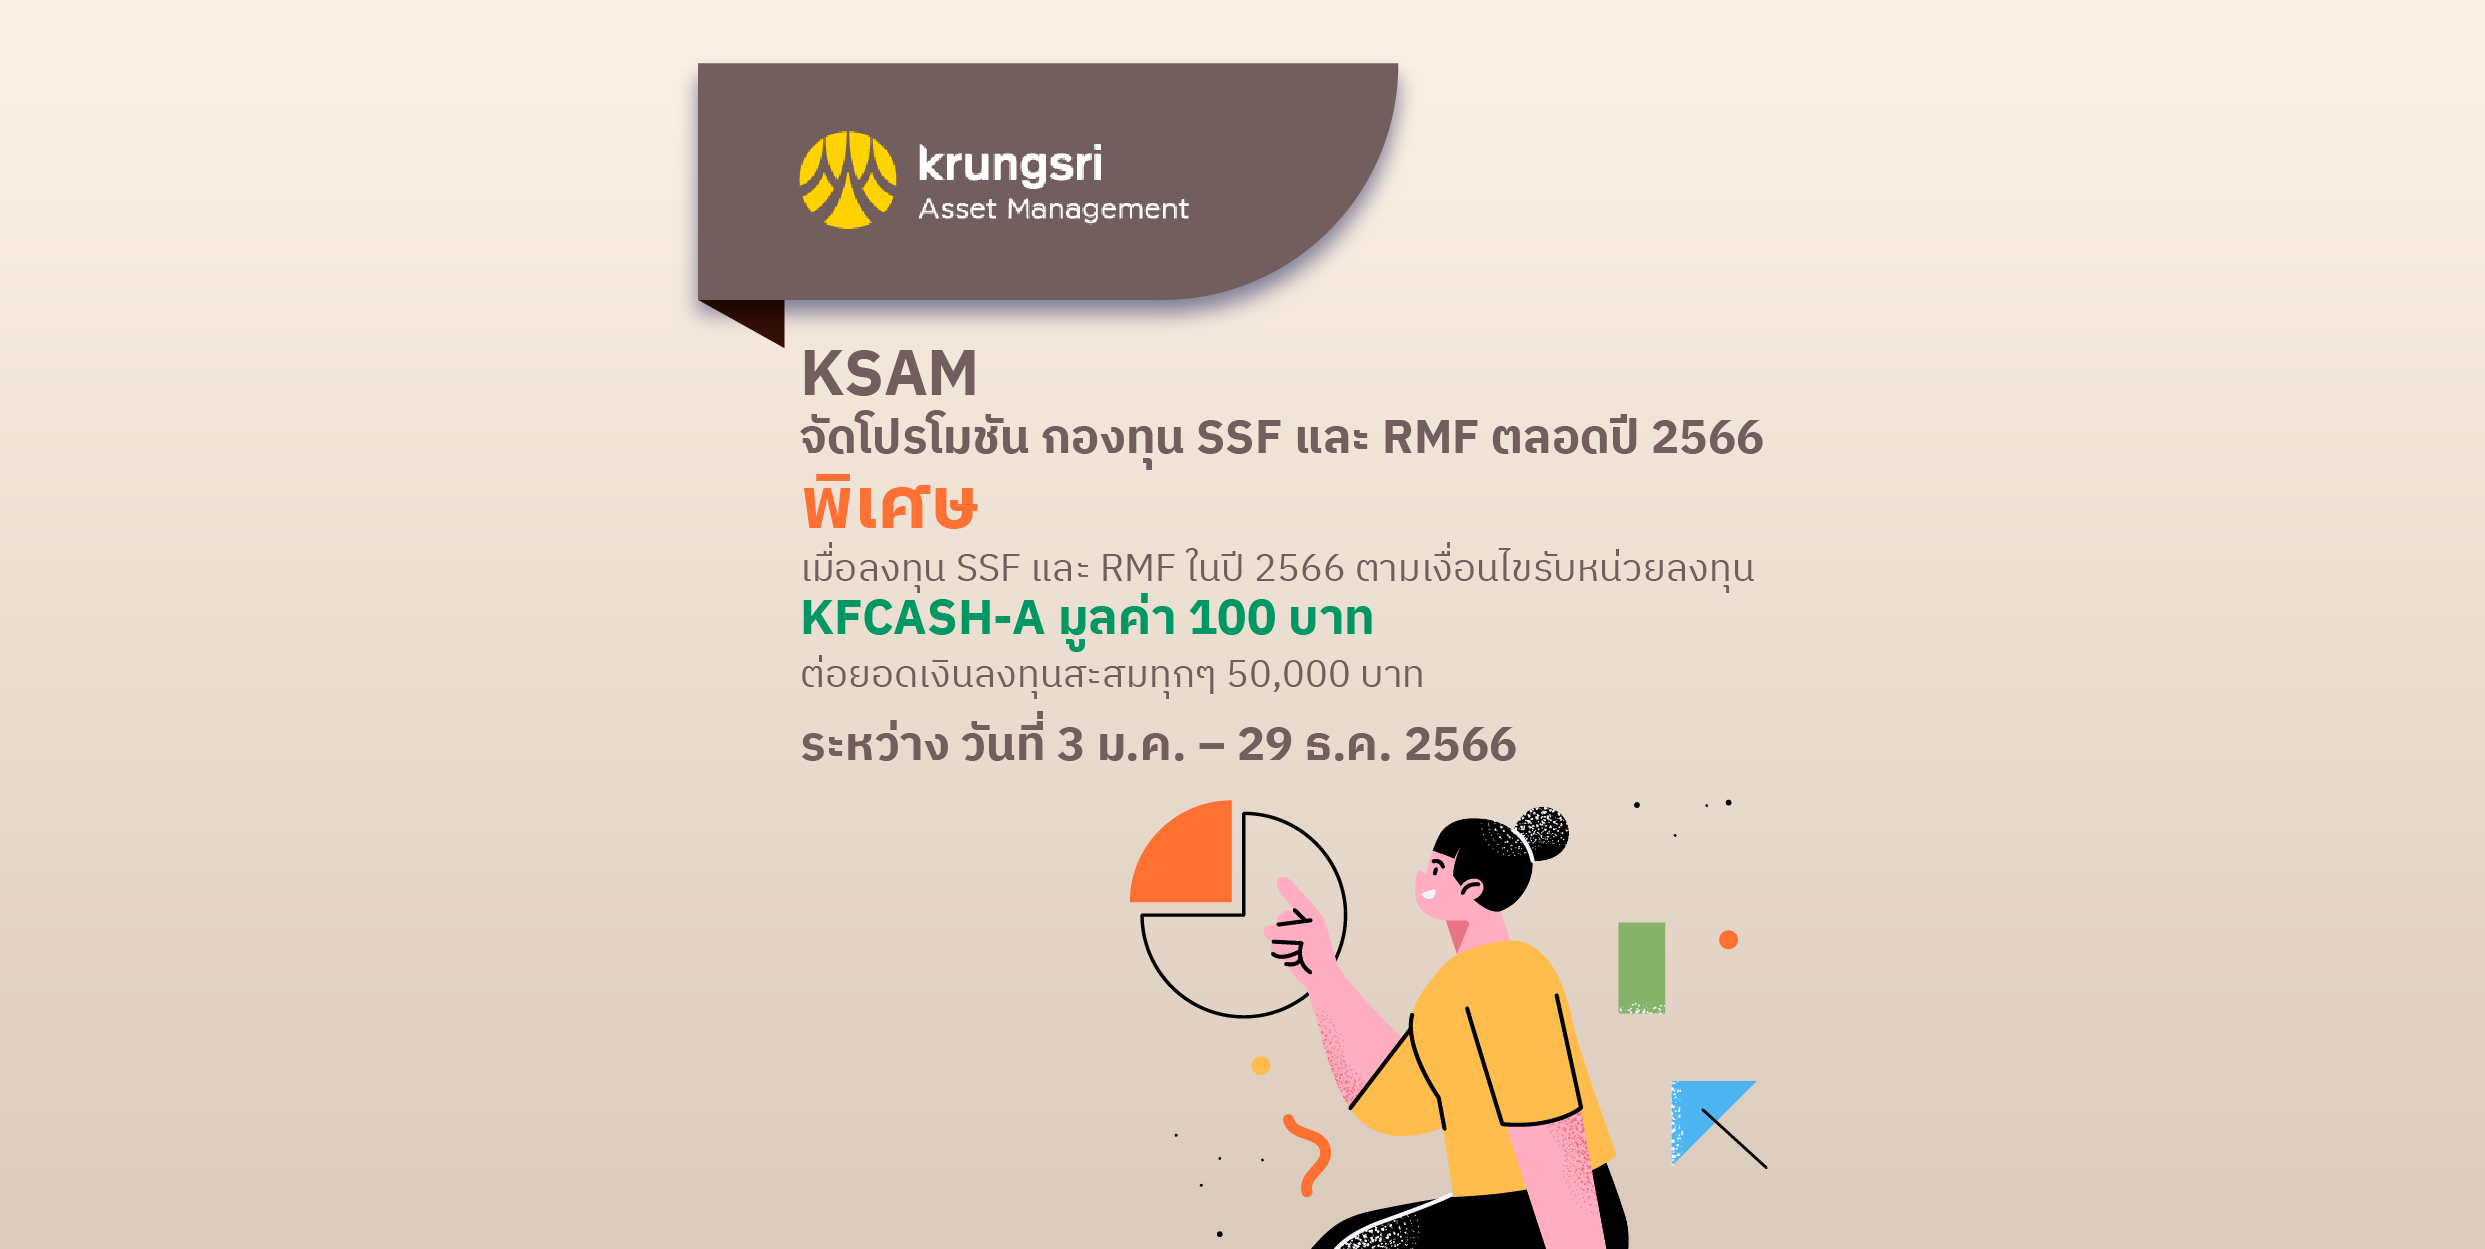 KSAM: รายการส่งเสริมการขายกองทุน SSF และ RMFตลอดปี 2566 ระหว่าง วันที่ 3 ม.ค. – 29 ธ.ค. 2566